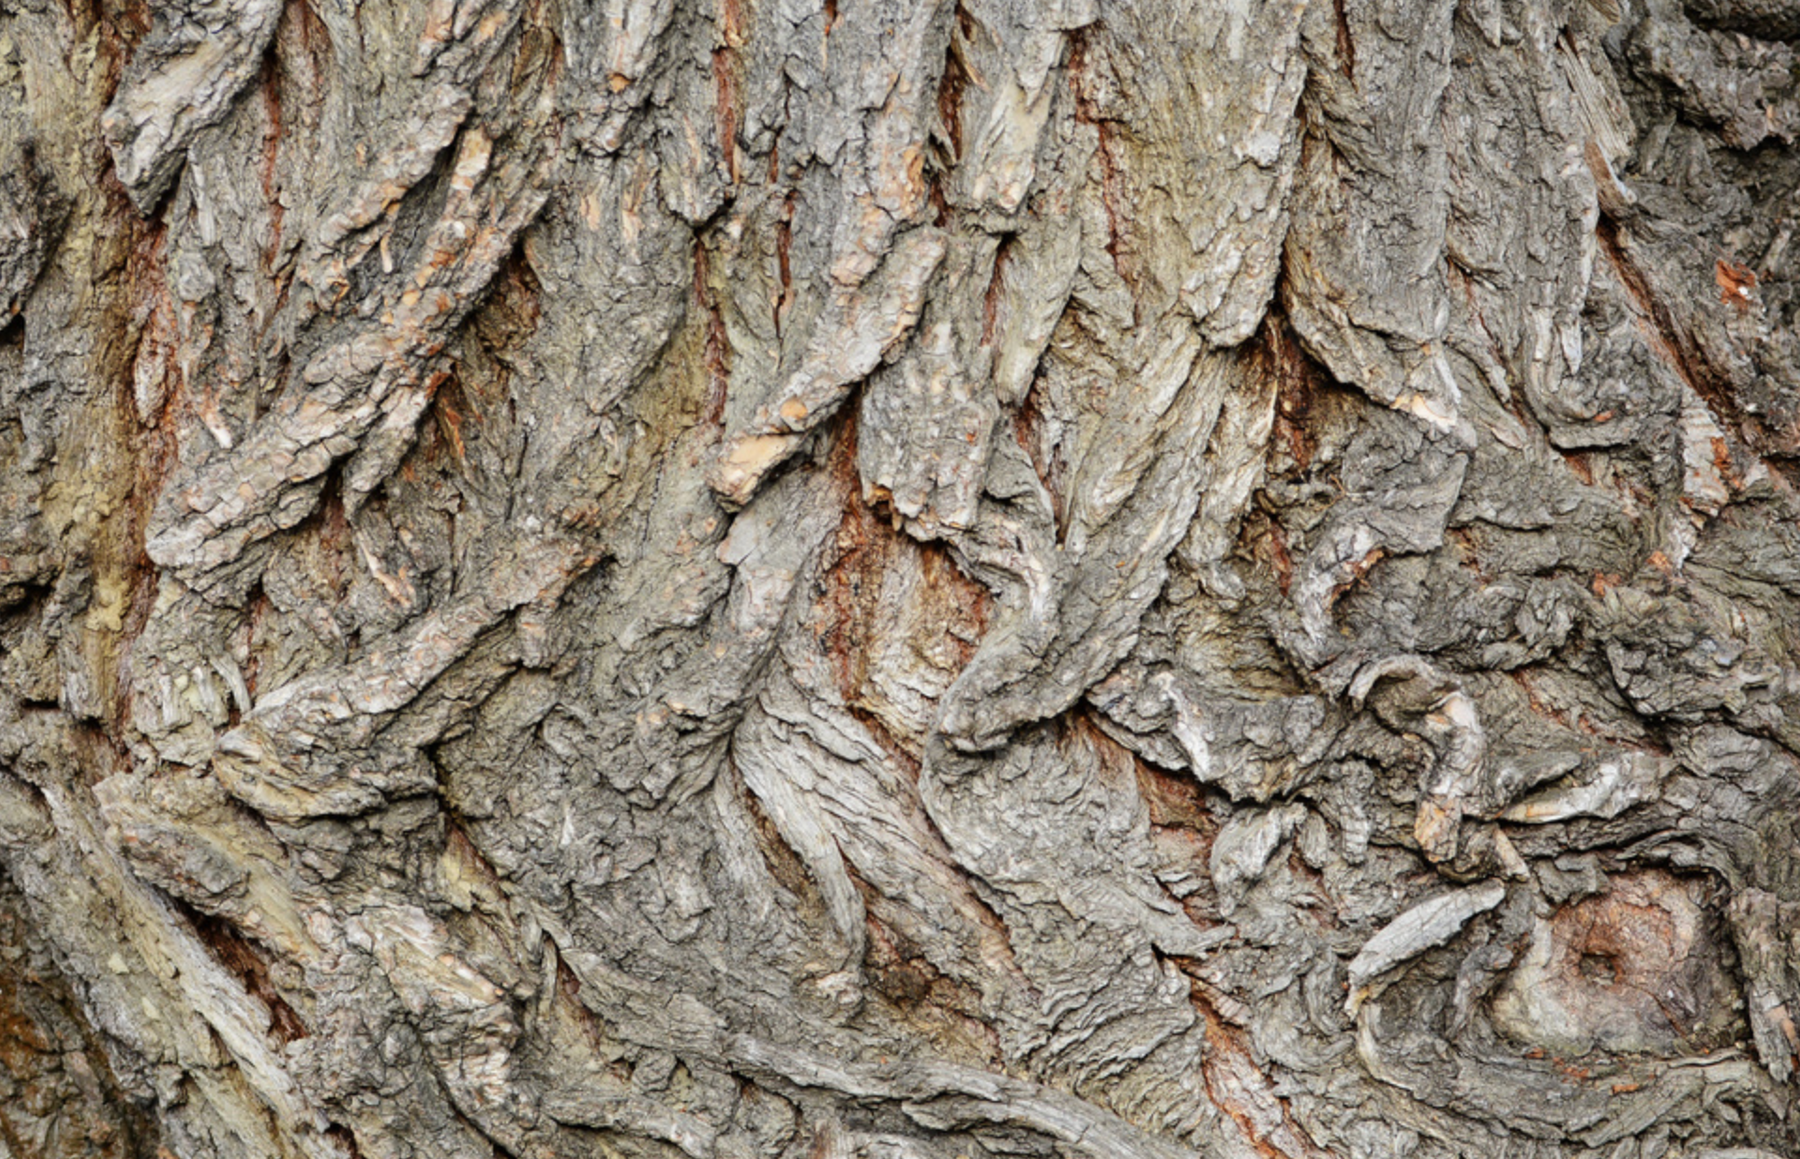 White willow bark up close